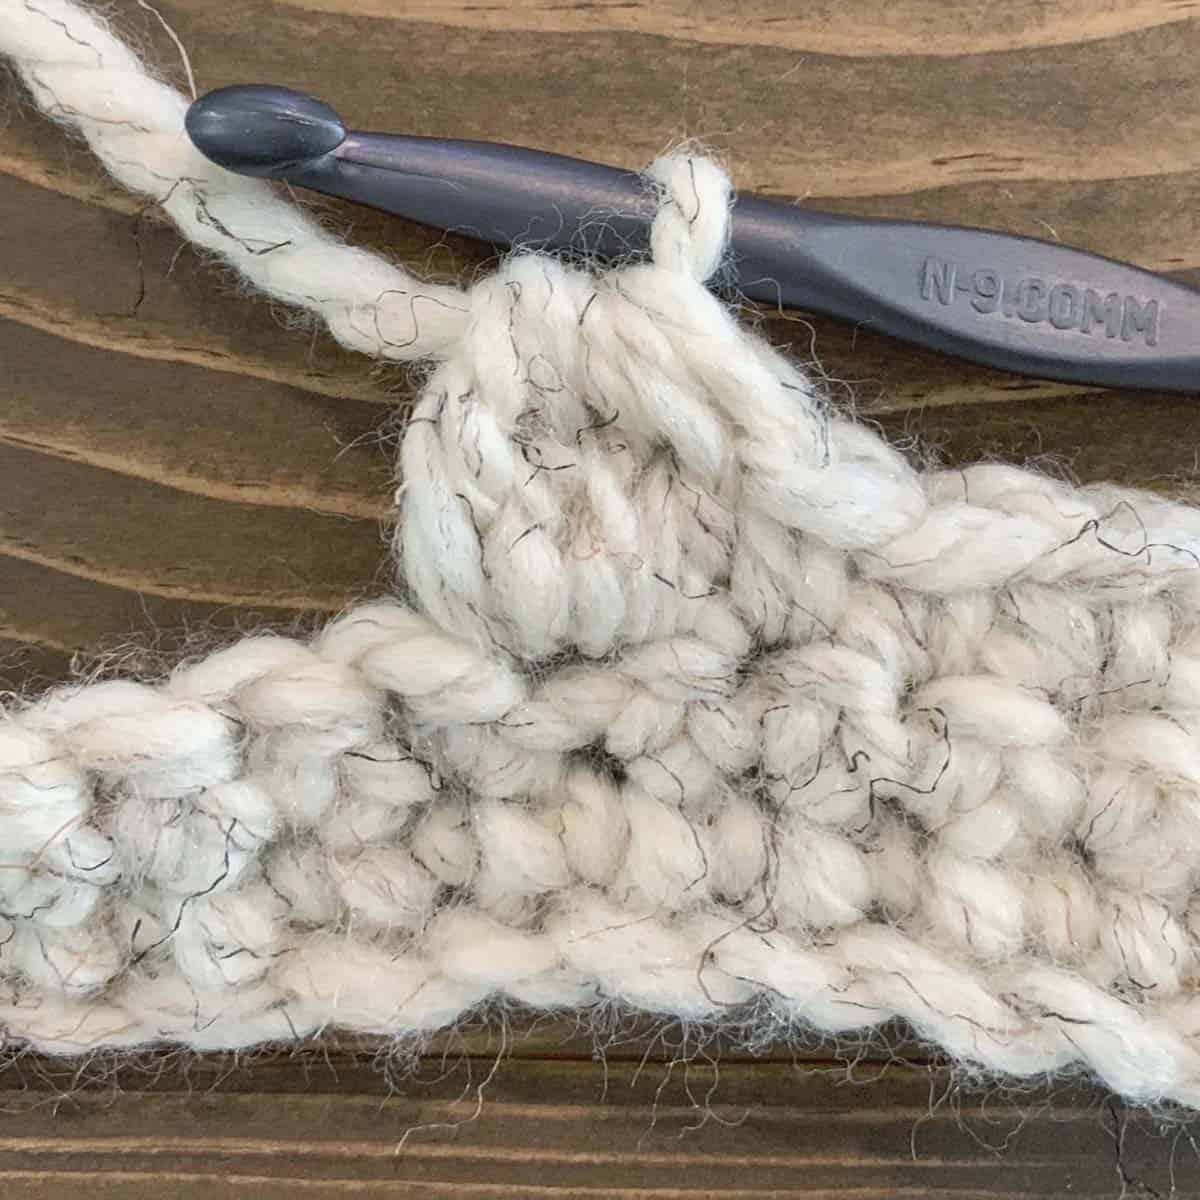 How to make a crochet bobble